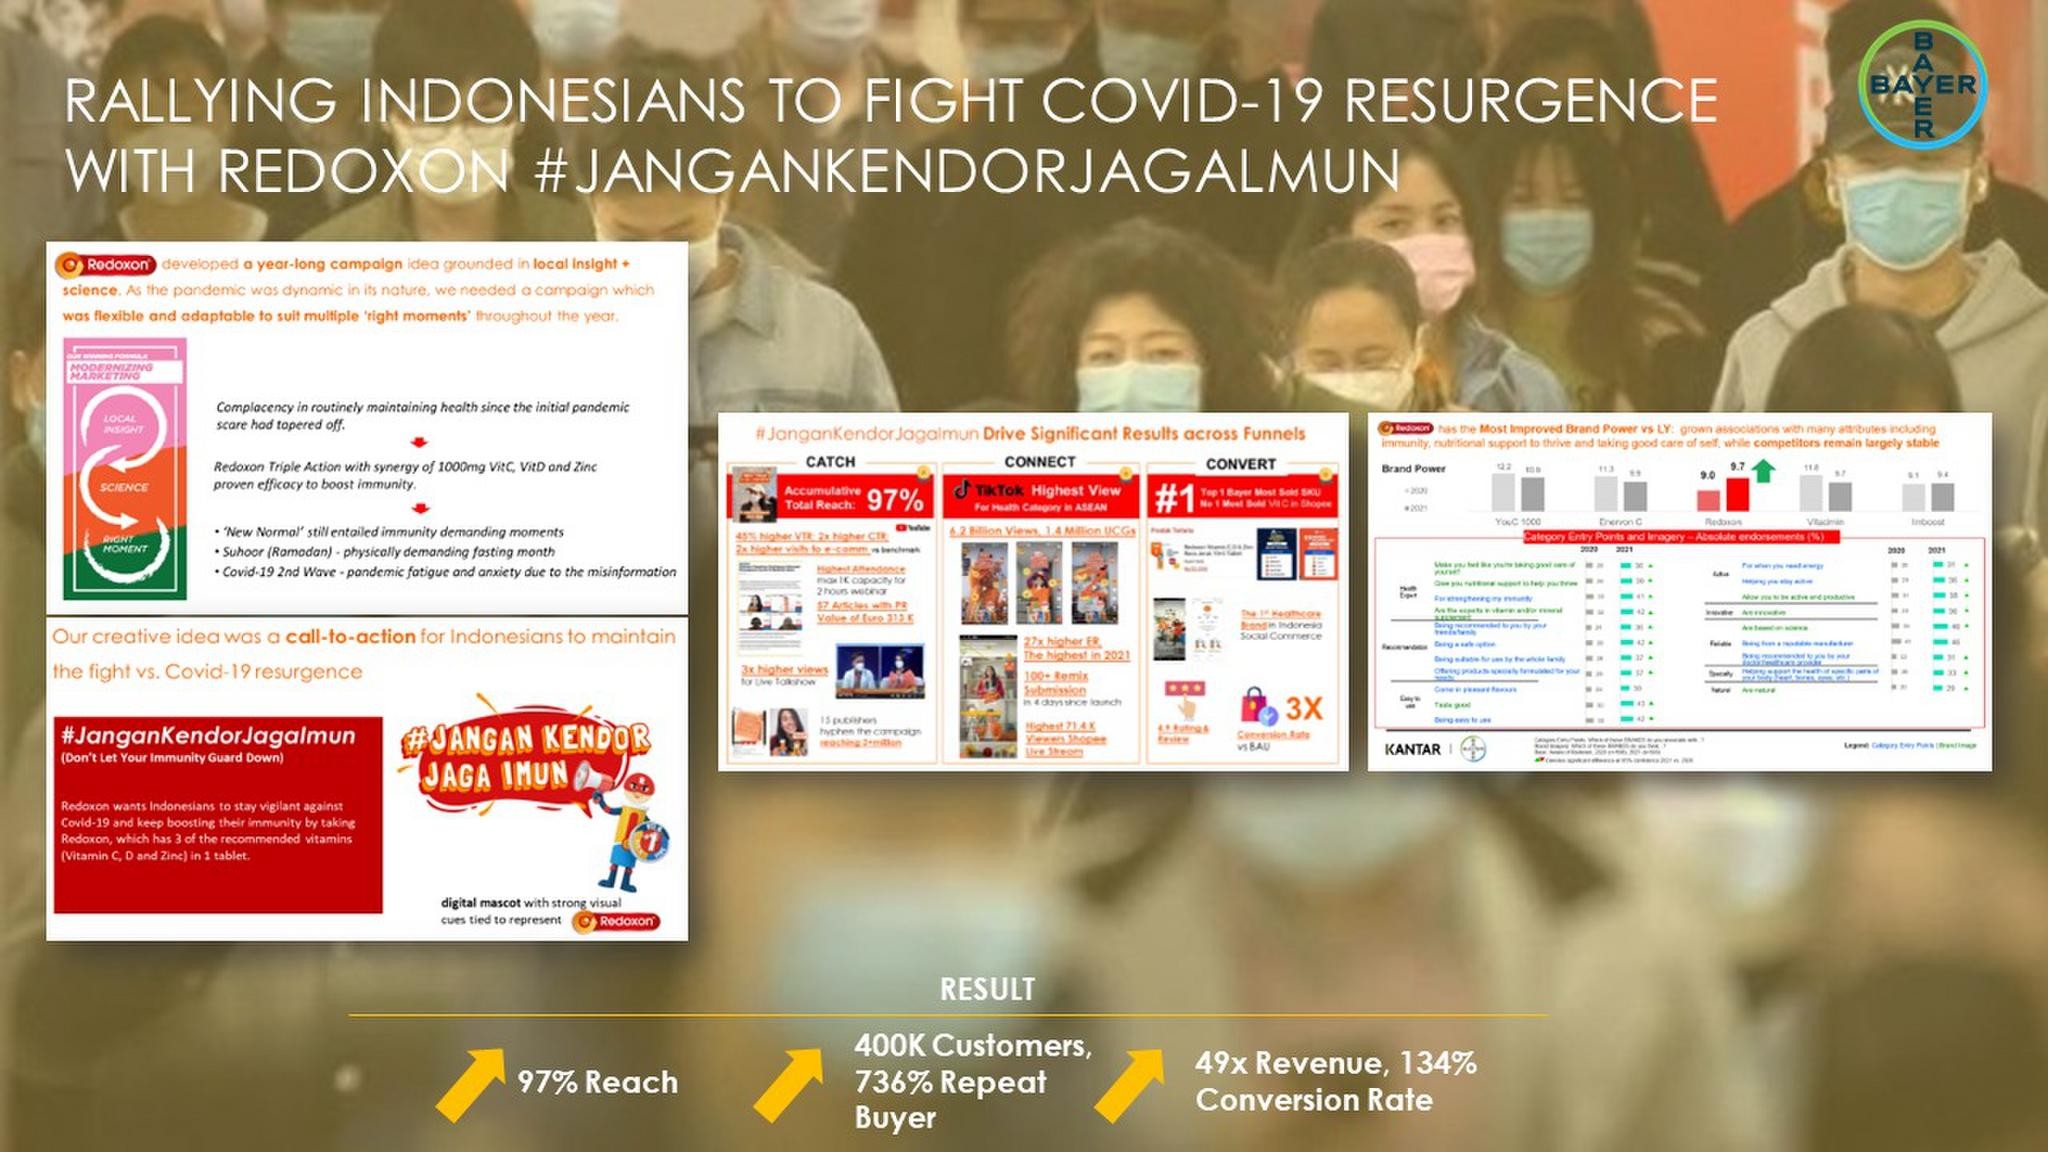 Rallying Indonesians to Fight Covid-19 Resurgence with Redoxon #JanganKendorJagalmun